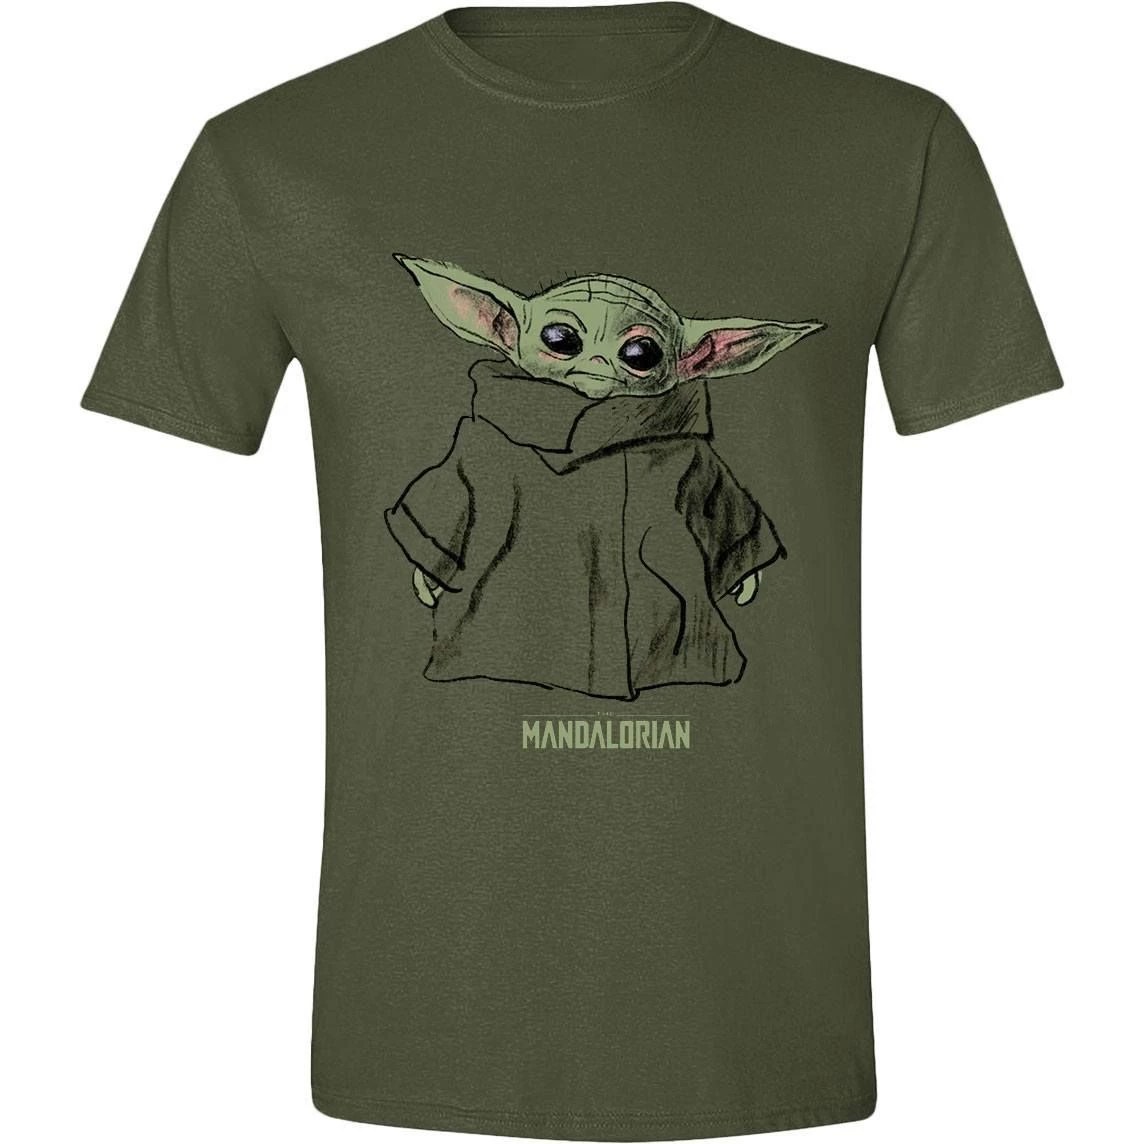 Star Wars The Mandalorian T-Shirt The Child Sketch Size XL PCMerch